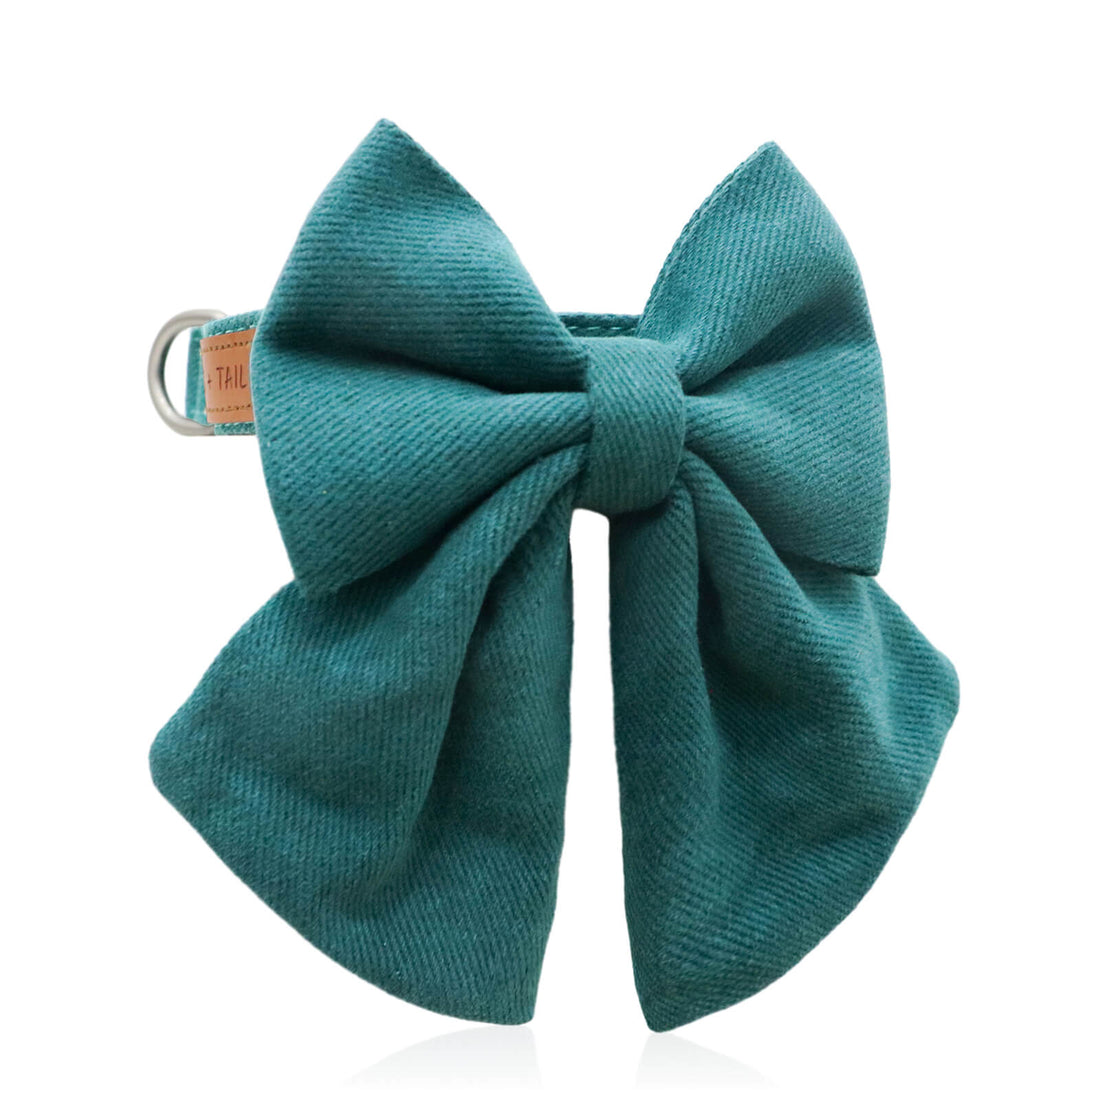 Emerald Dog Bow Tie Collar - Classy Pet Accessories